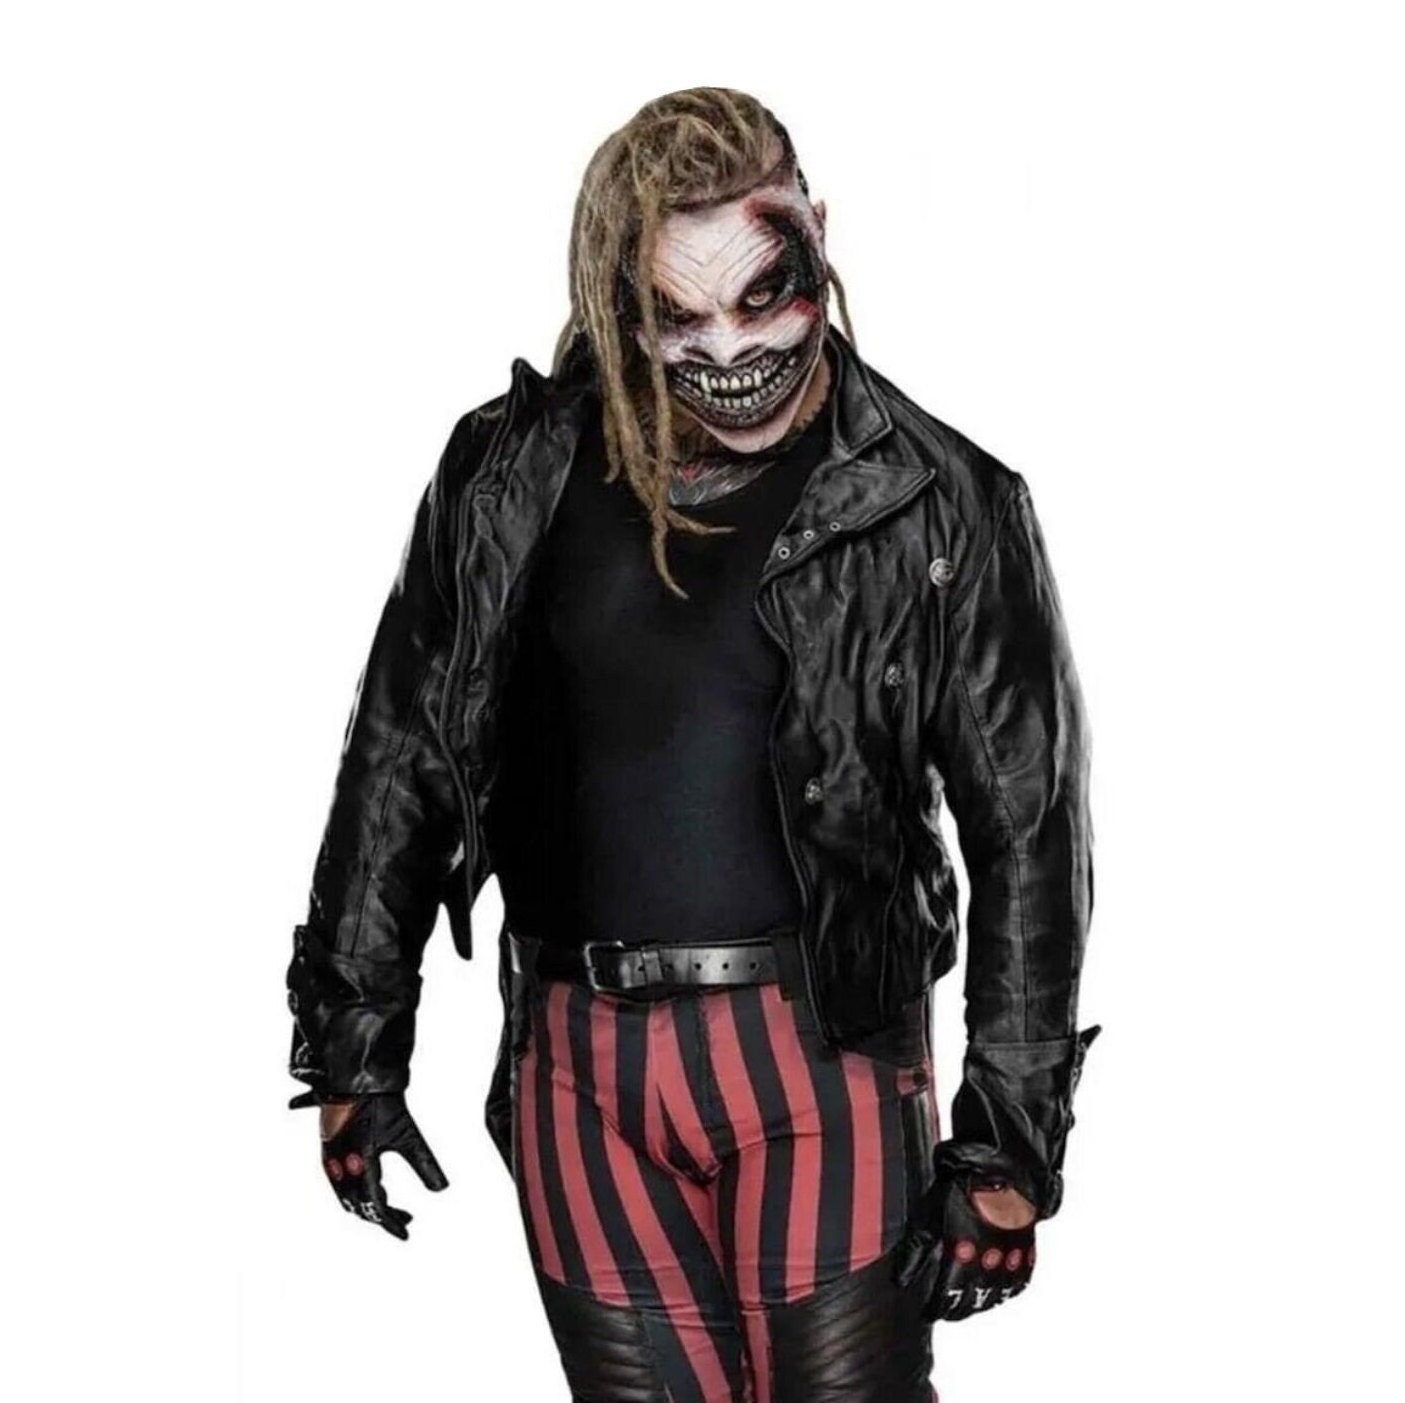 Bray Wyatt The Fiend Plastic Mask